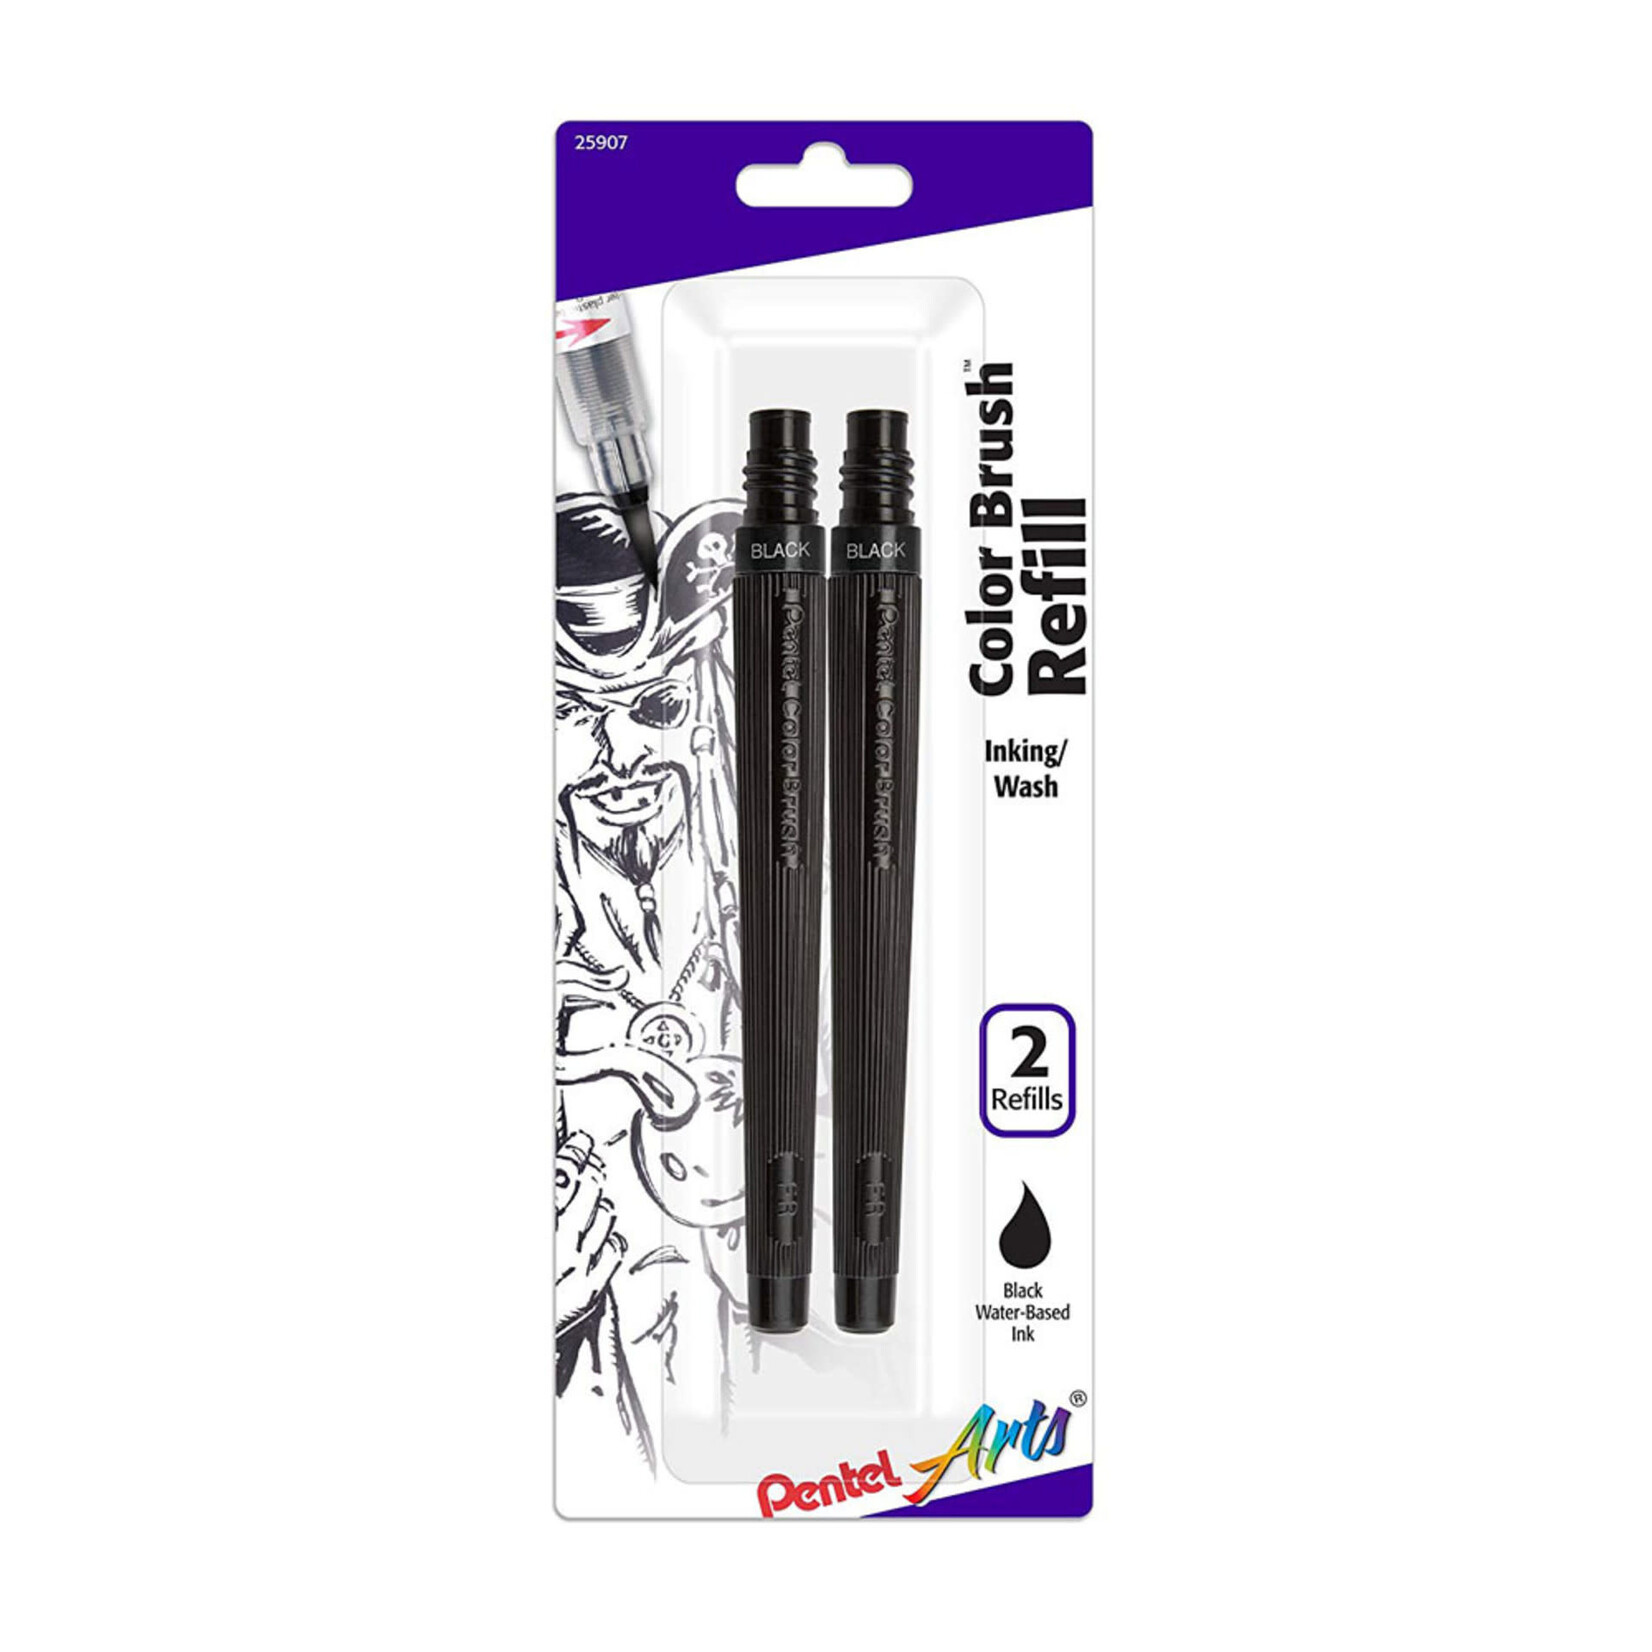 Pentel Color Brush Refill Ink Cartridges, Black Water-Based, 2/Pkg